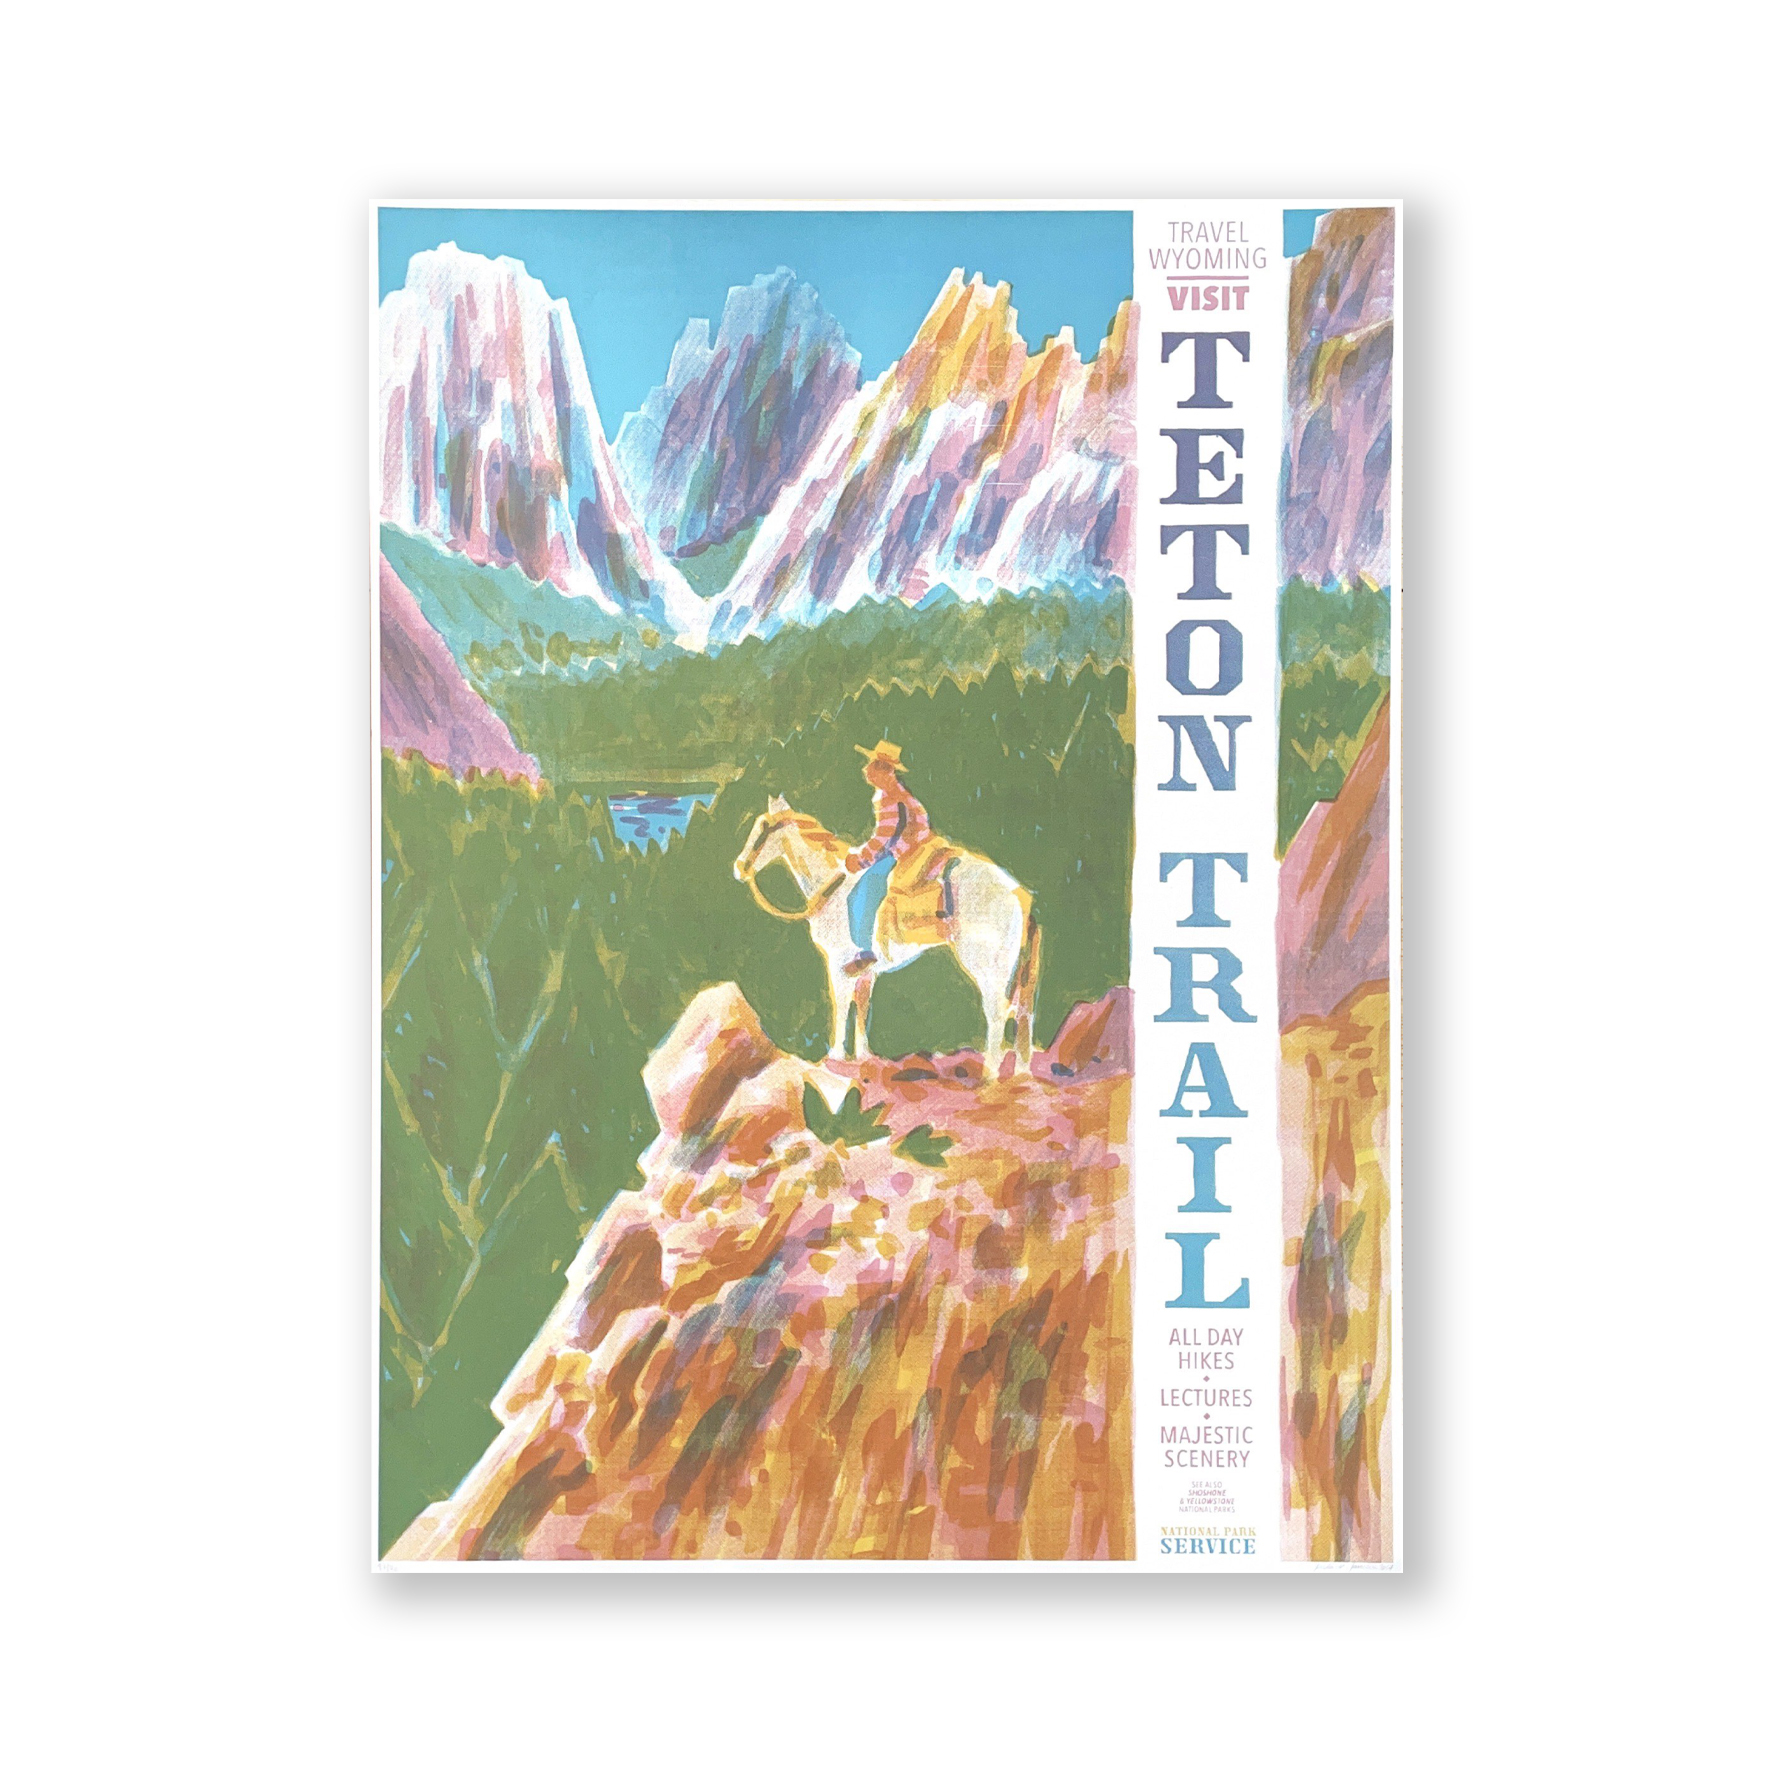 Teton trail B2